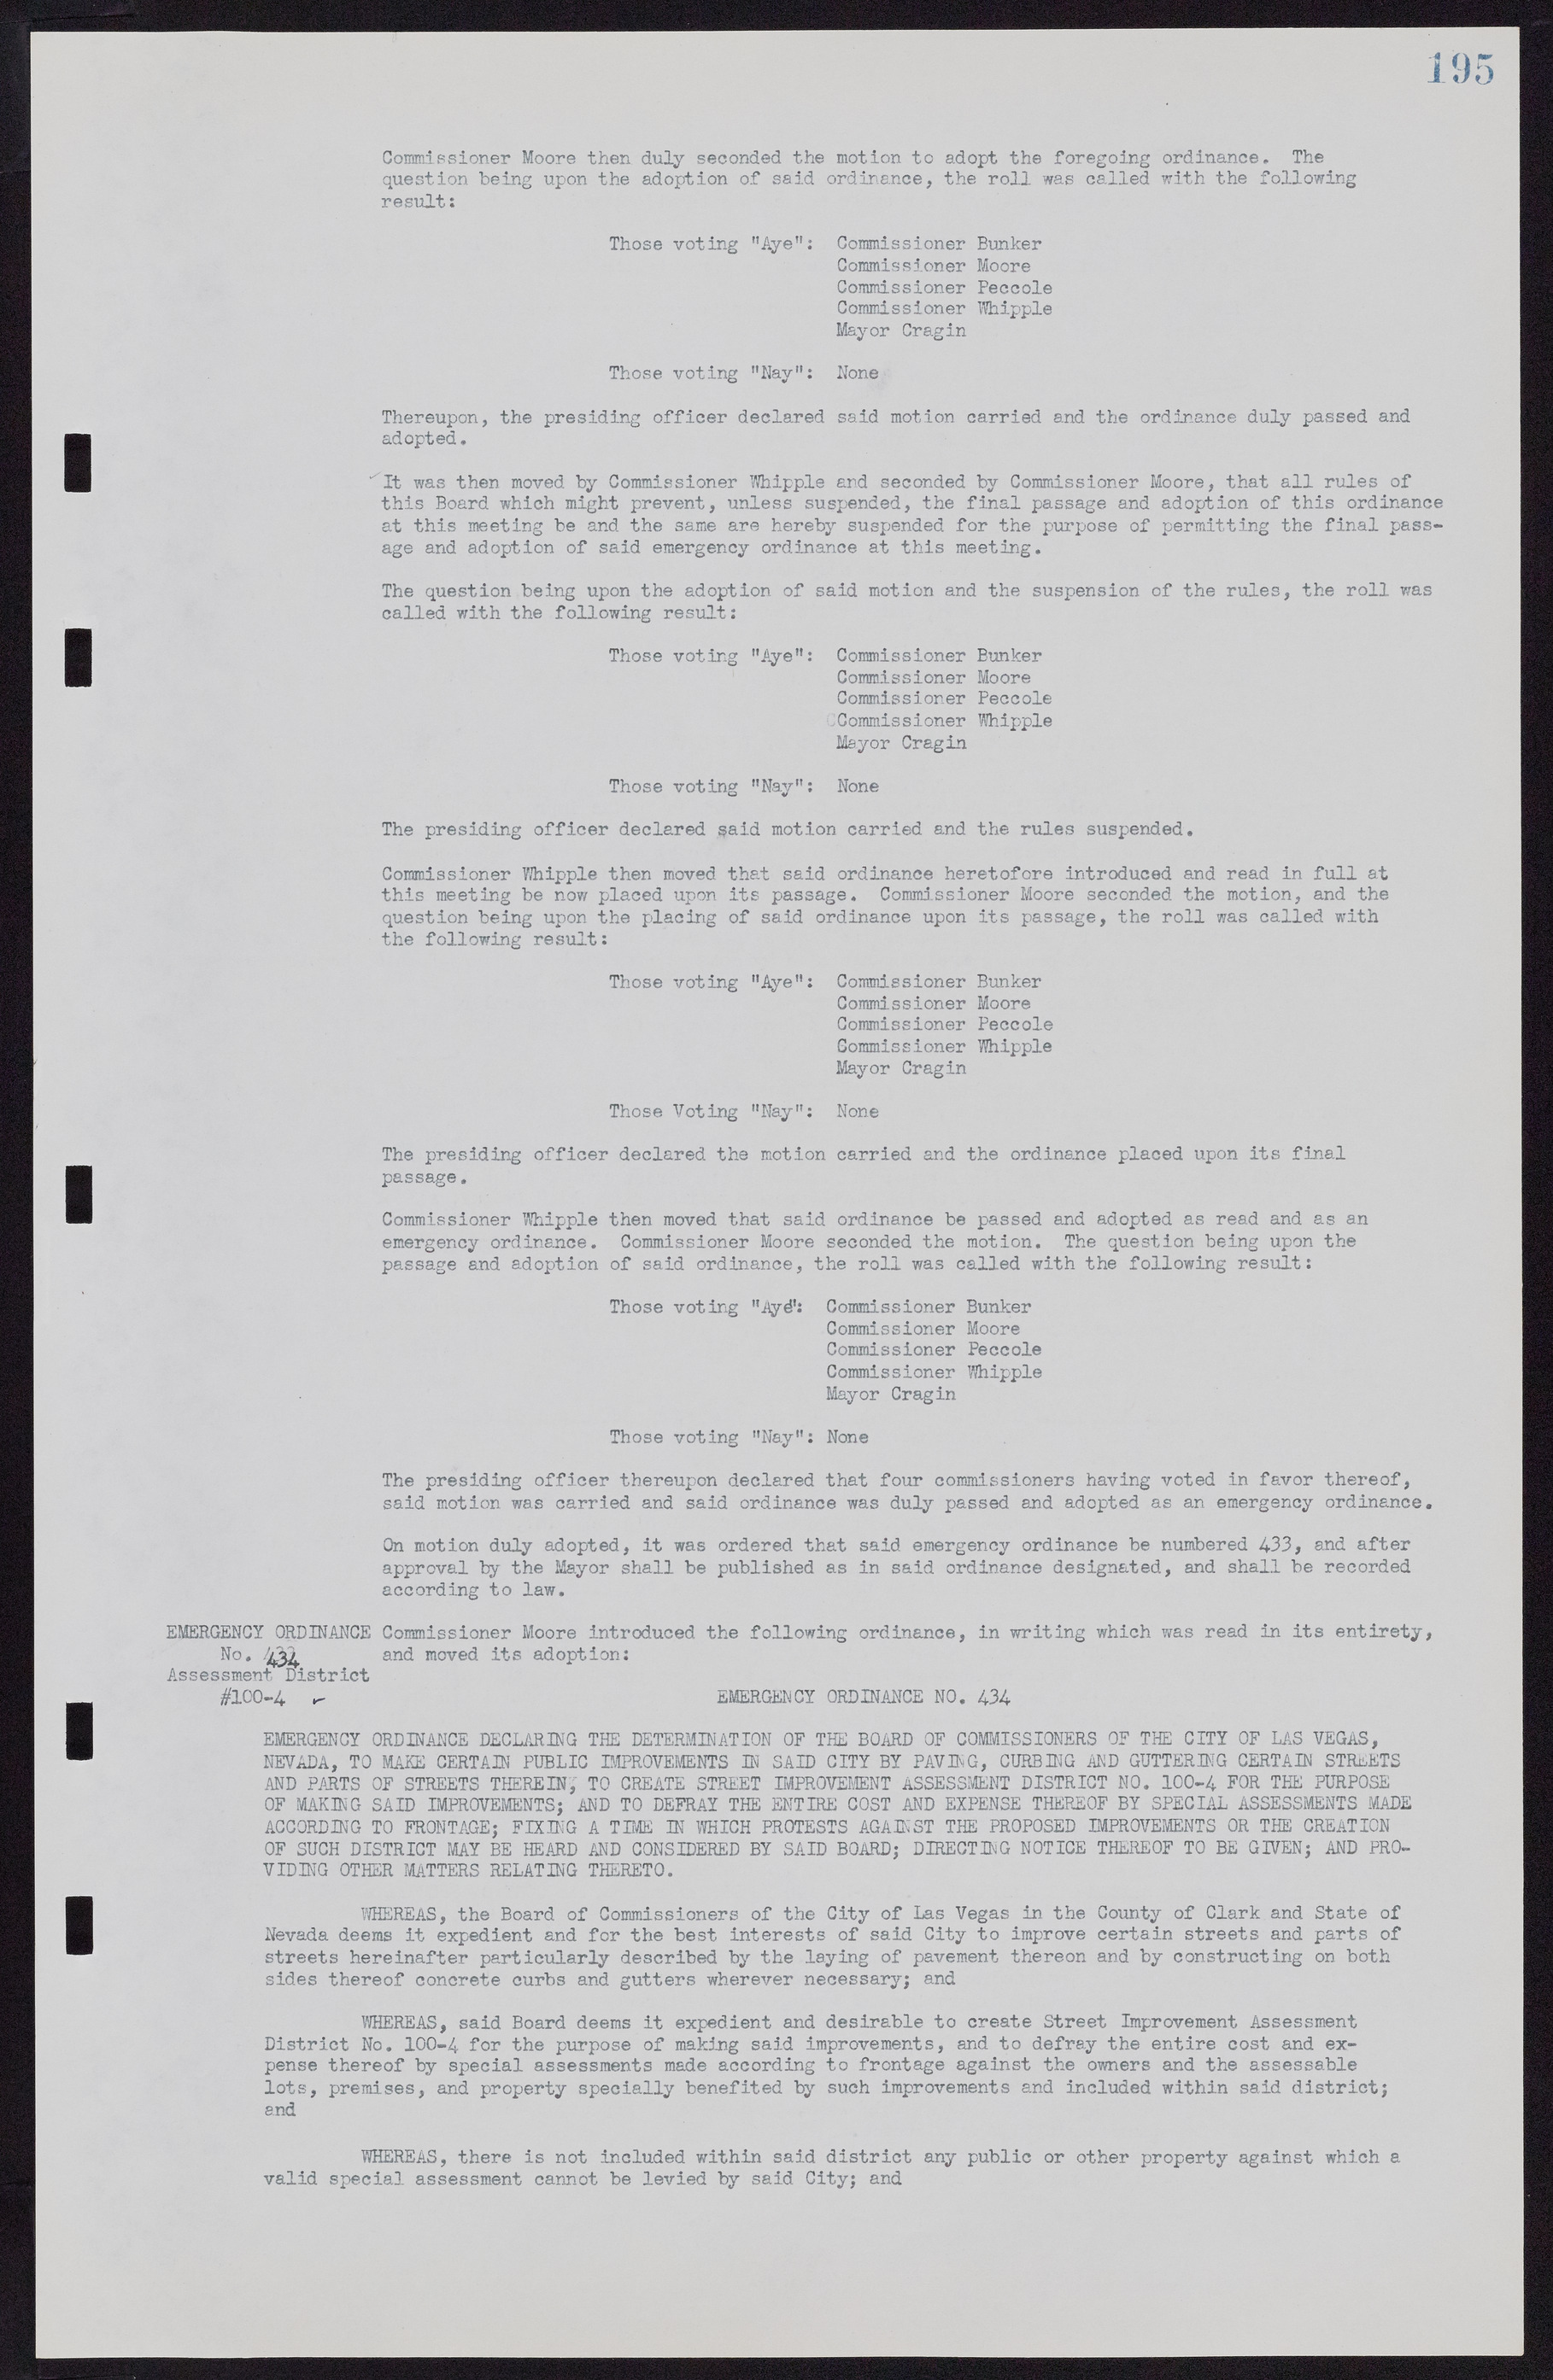 Las Vegas City Commission Minutes, November 7, 1949 to May 21, 1952, lvc000007-205